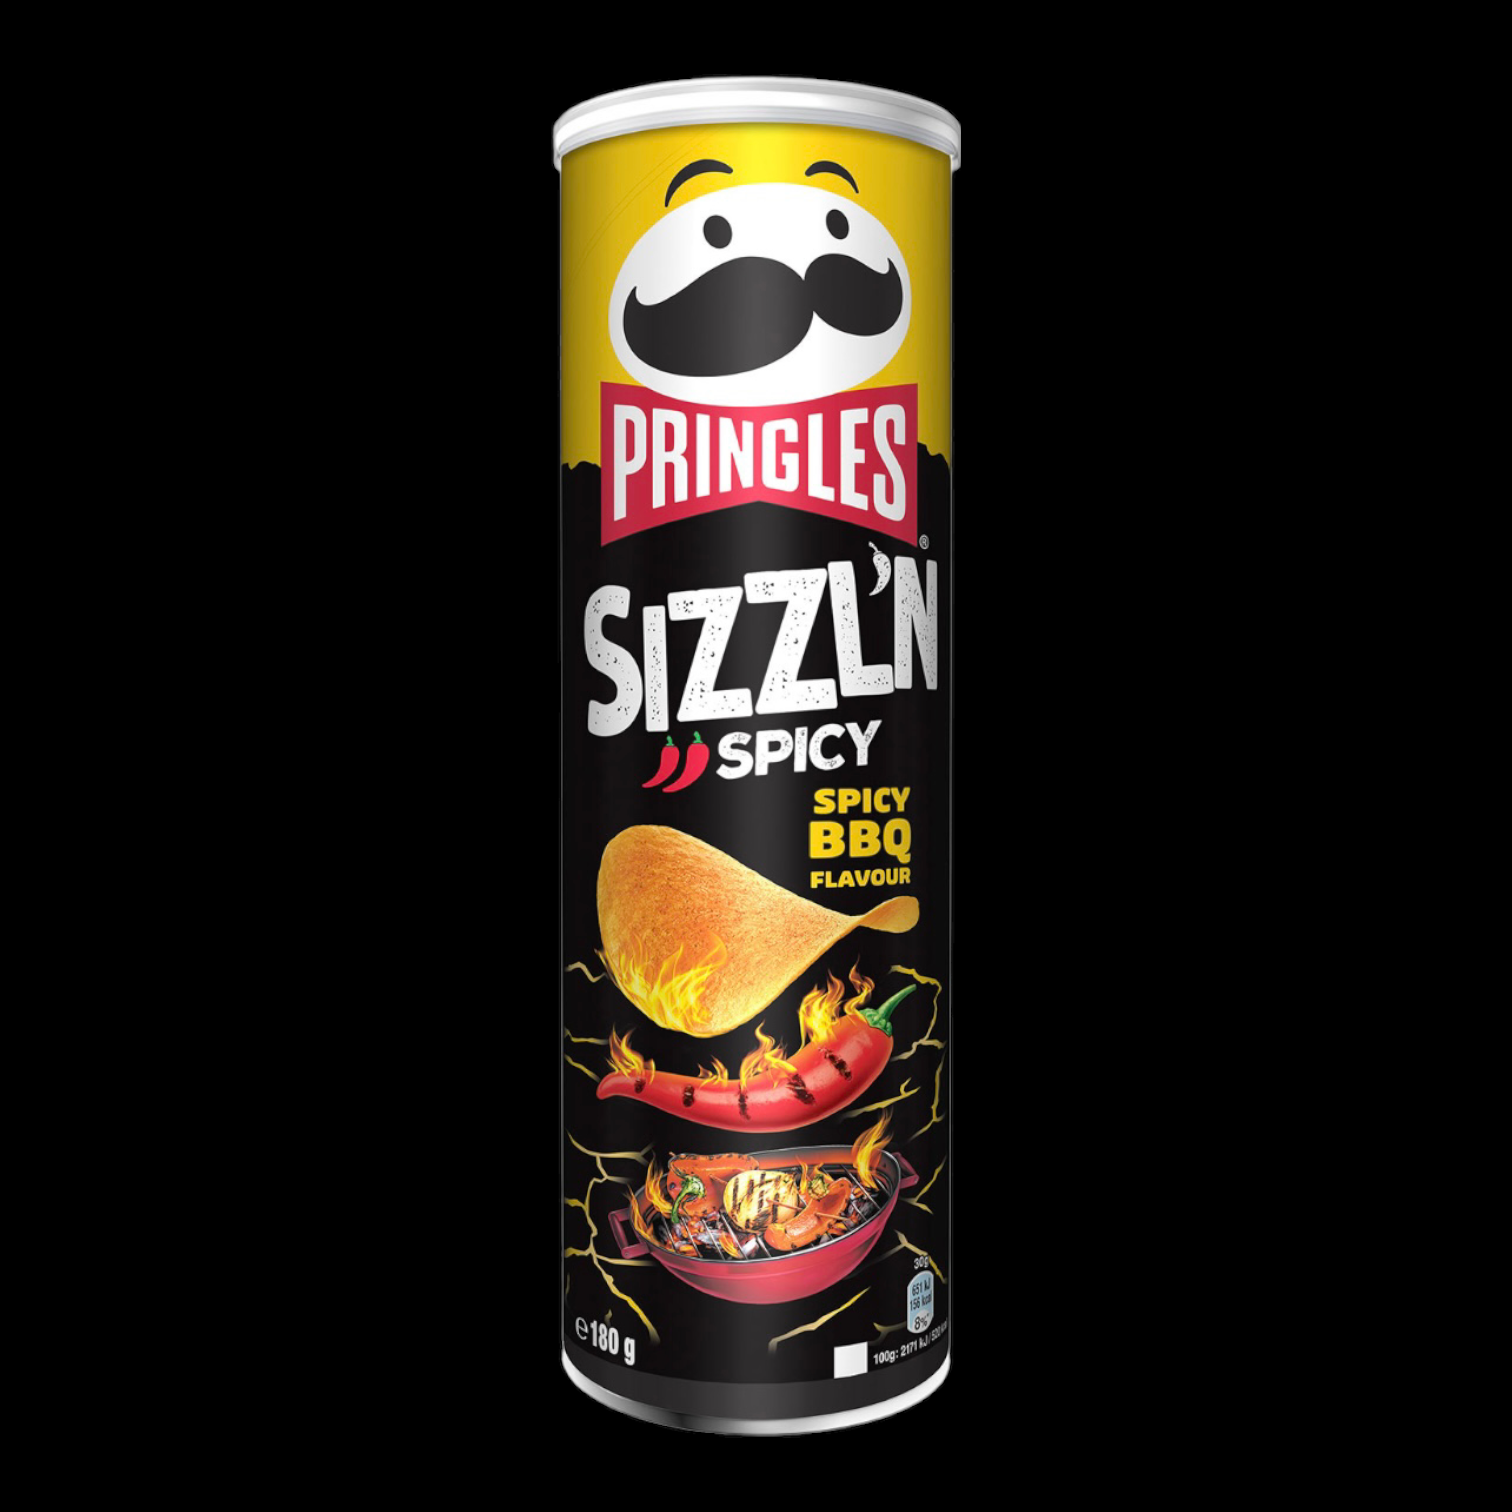 Sizzl\'n Spicy 180g Pringles BBQ